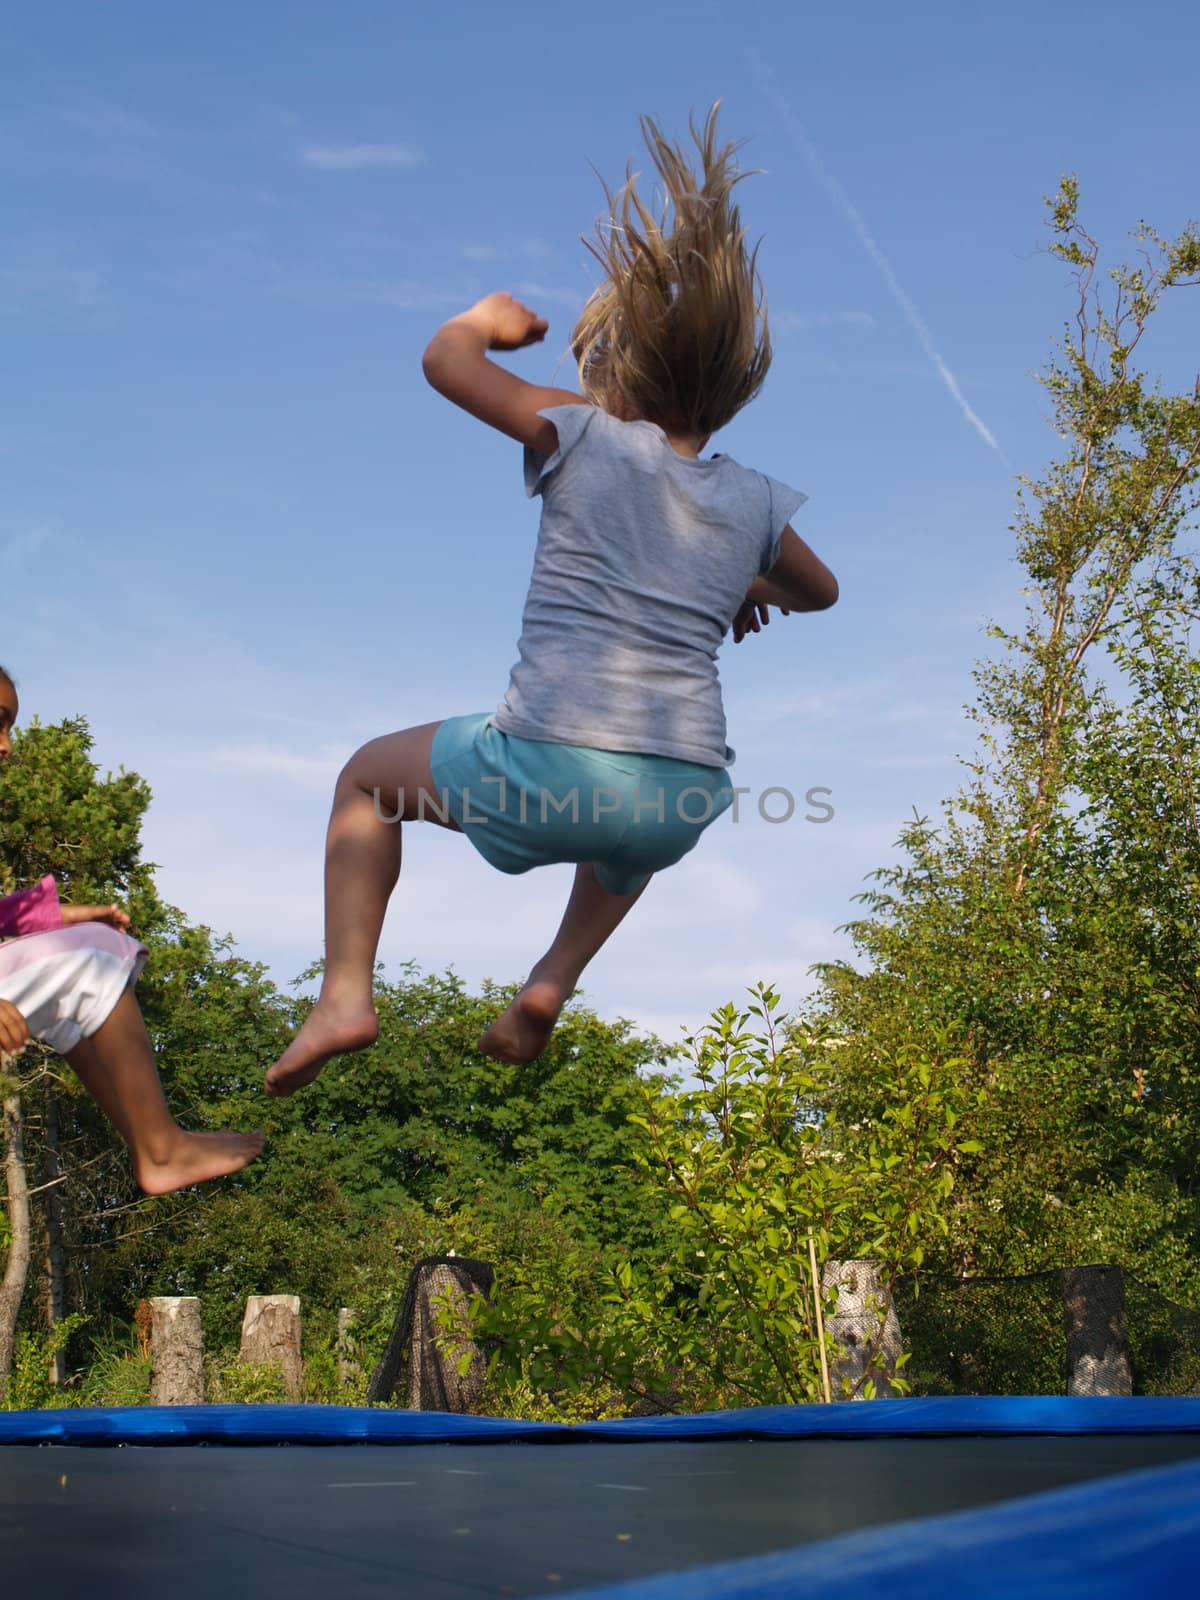 jumping kids by viviolsen